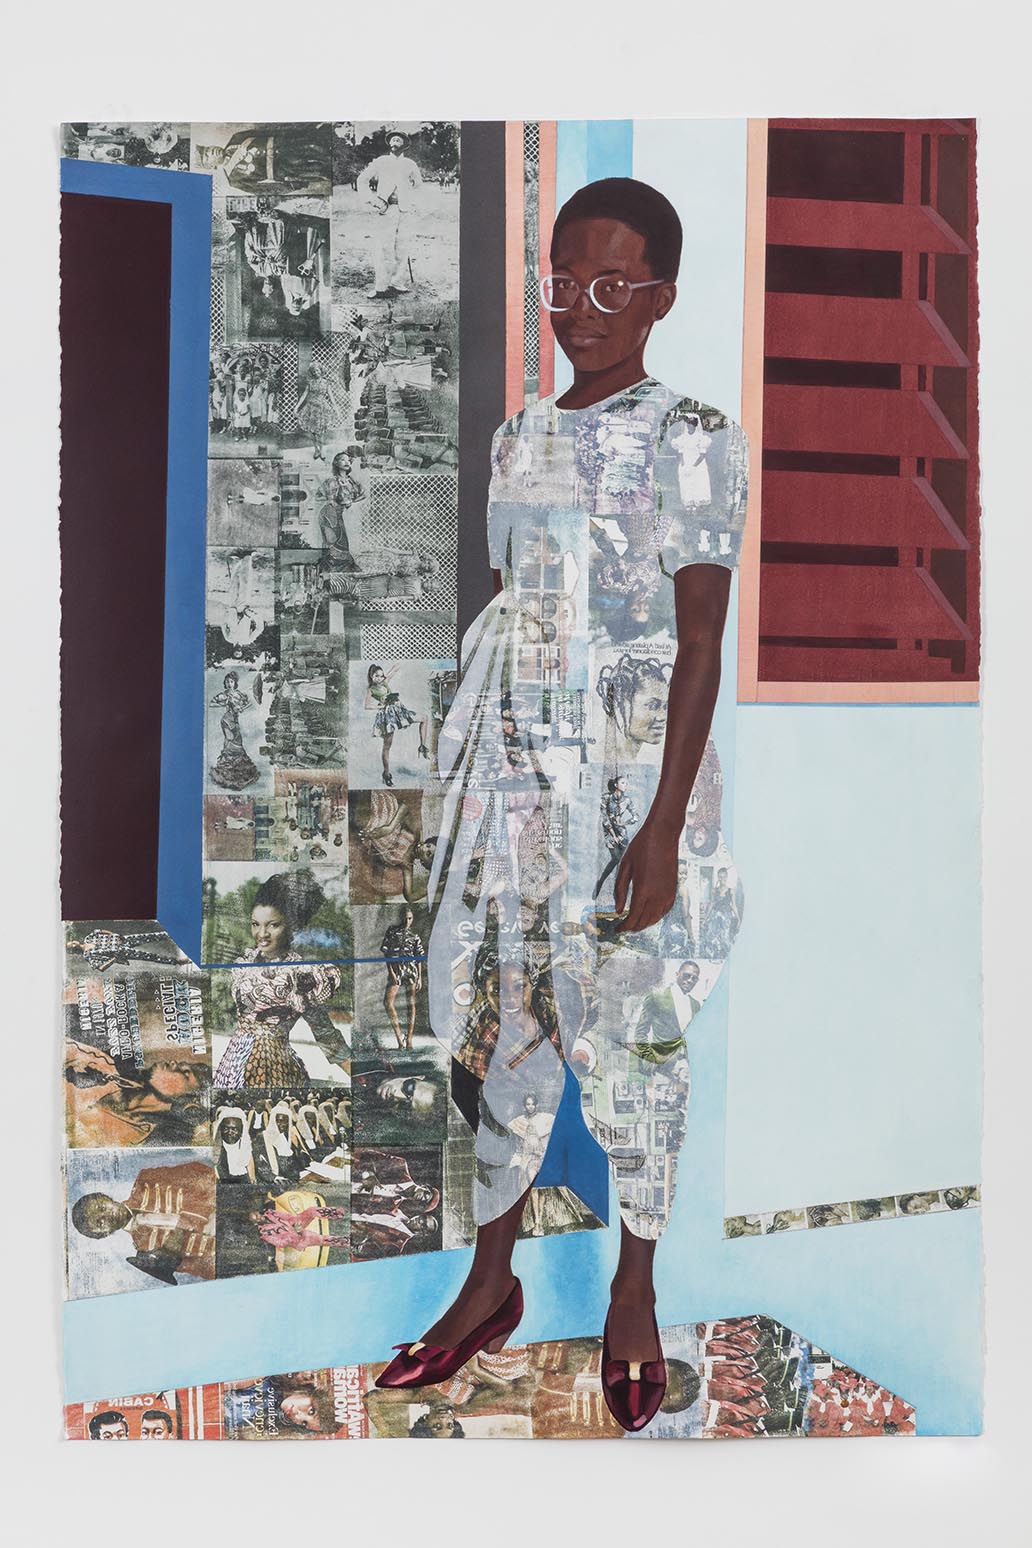 Njideka Akunyili Crosby、The Beautyful Ones no.1、2015年。アクリル、パステル、色鉛筆、ゼロックスの紙への転写。 60 x42インチ。アーティストとビクトリアミロ、ロンドンの礼儀。ジェイソン・ウィッシュによる写真。